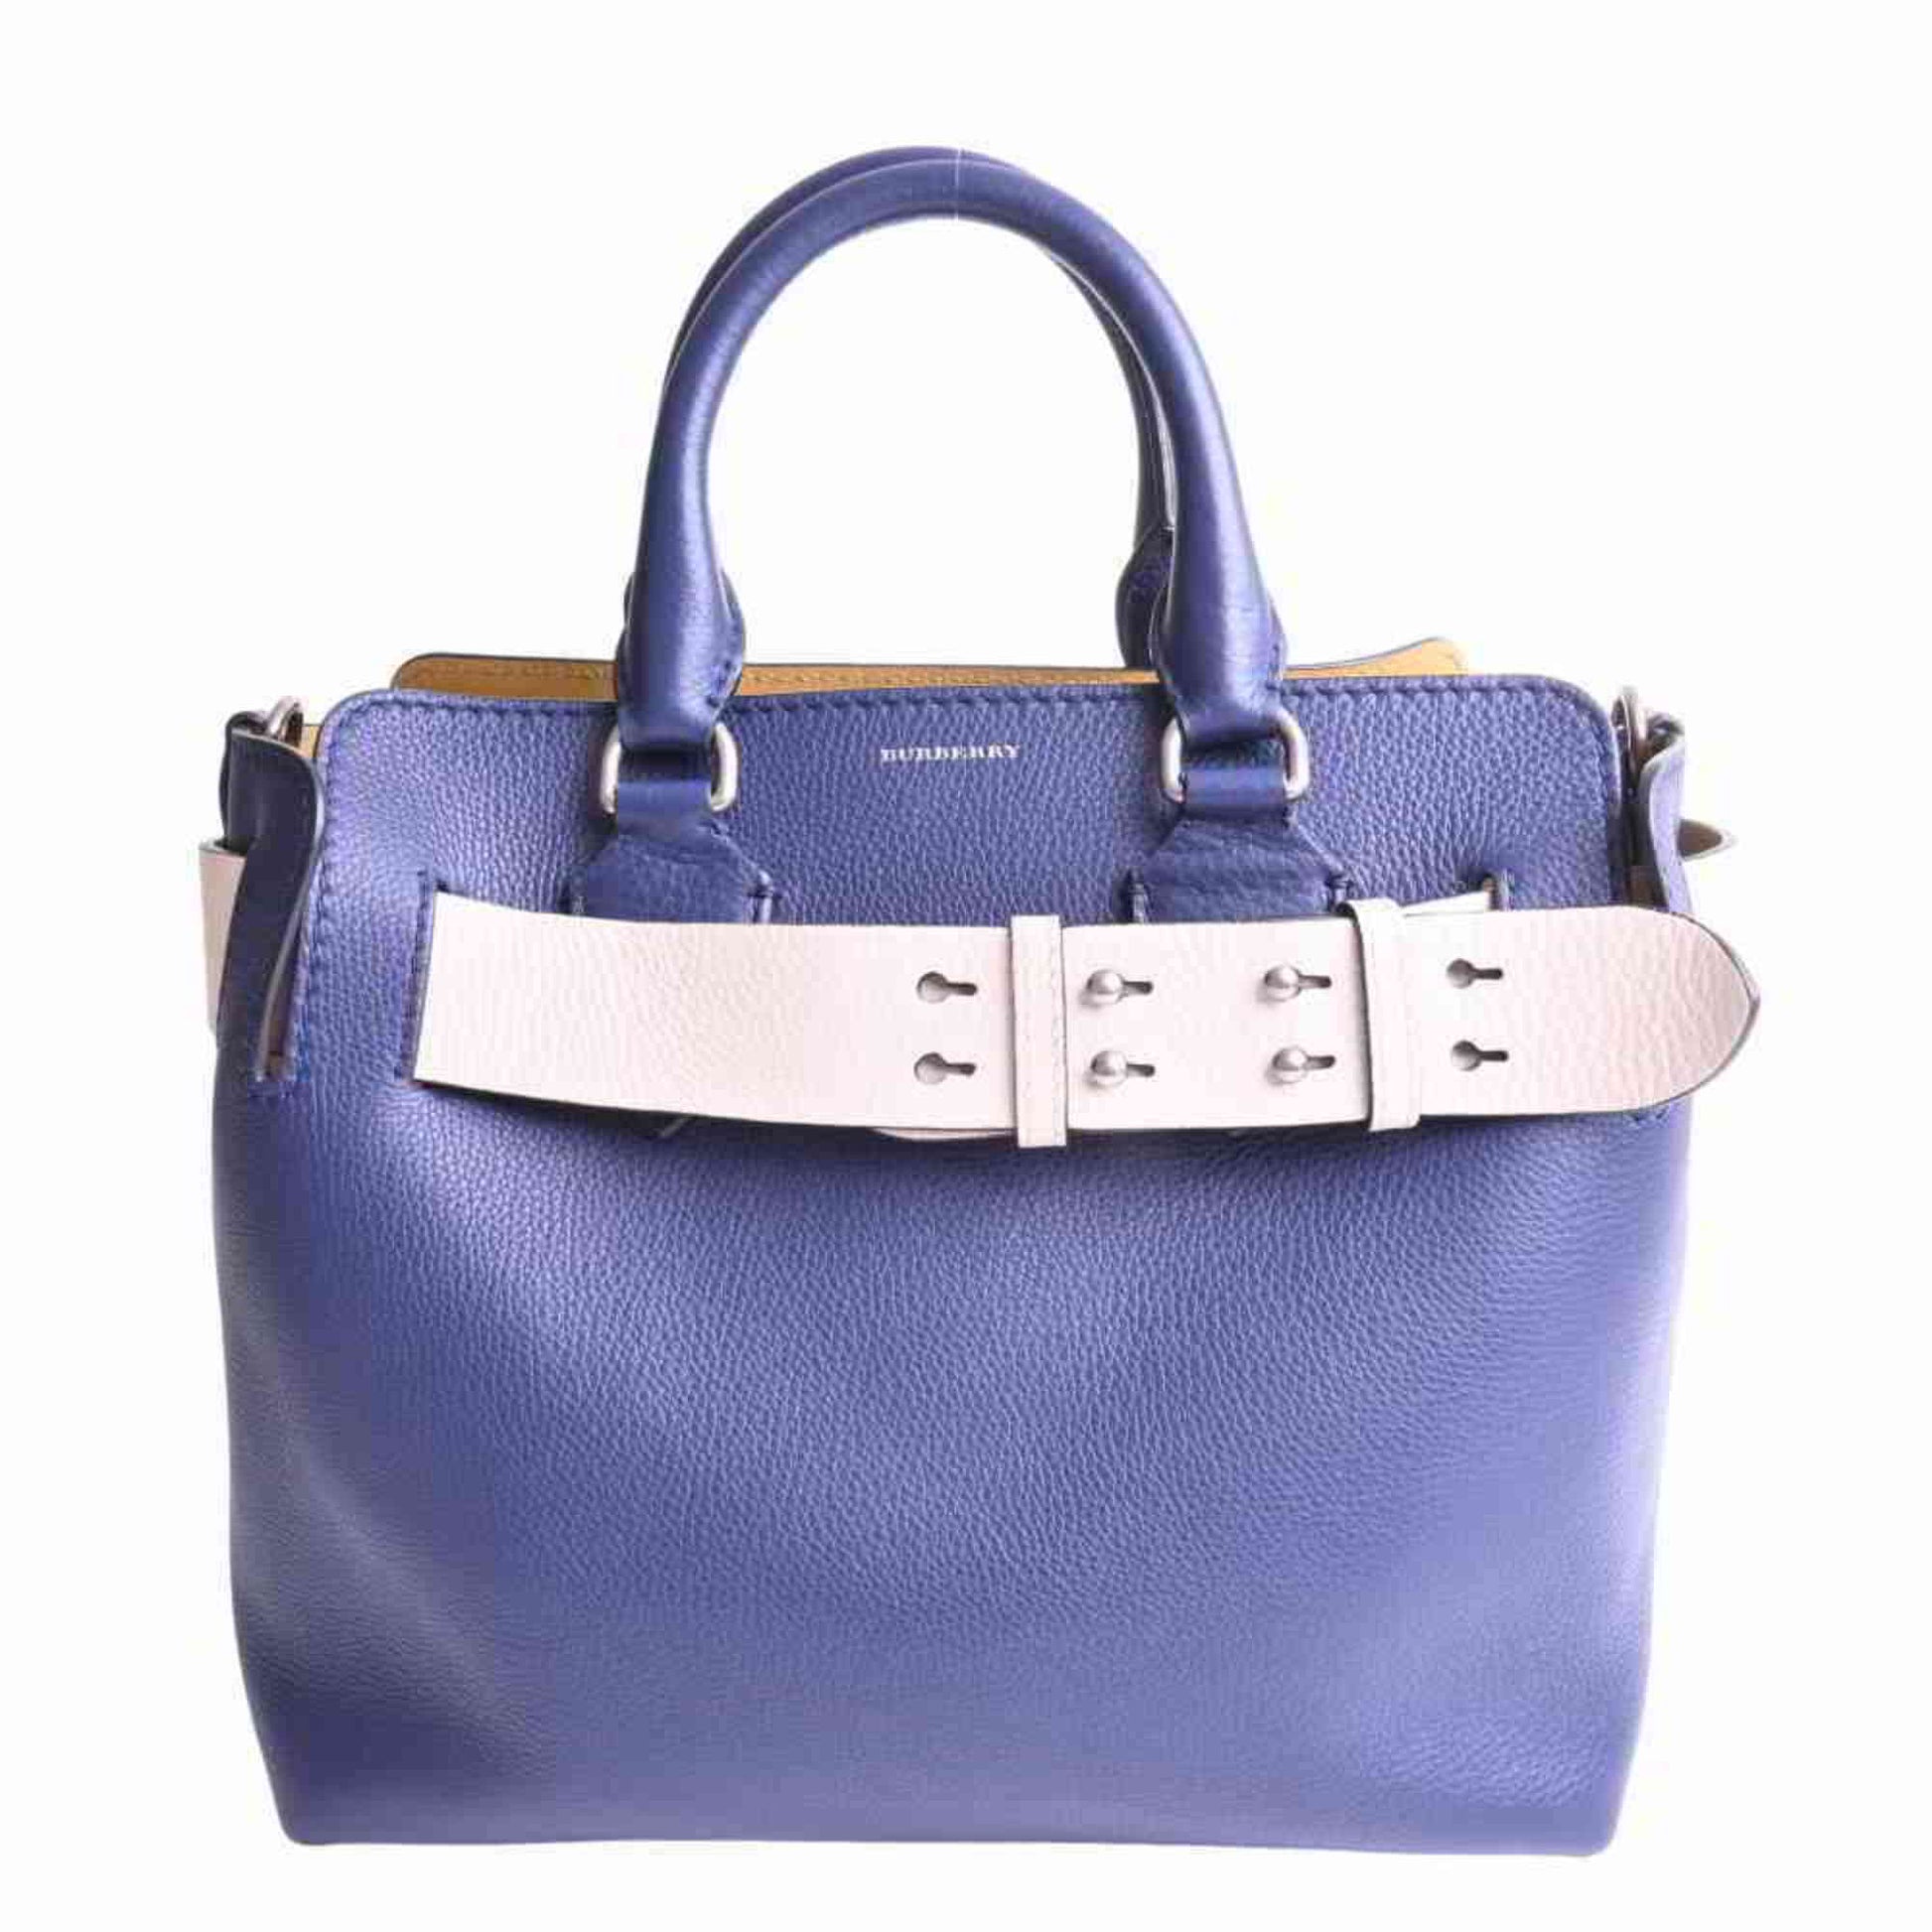 Burberry Leather Small Belt Bag Handbag Navy